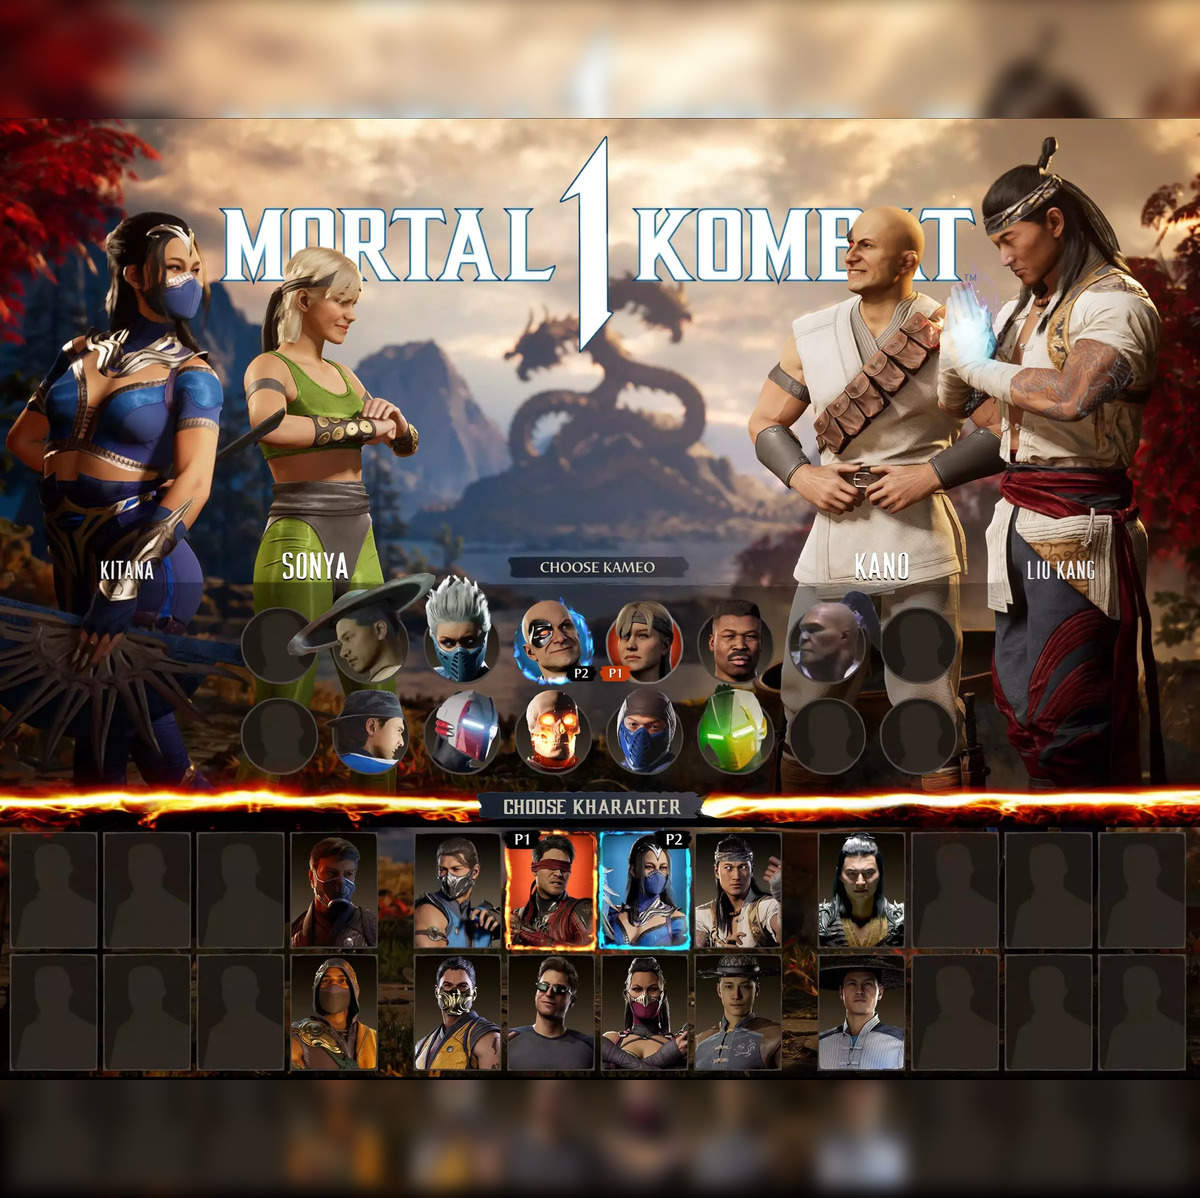 MORTAL KOMBAT 1 - Kombat Pack 2 DLC Characters 